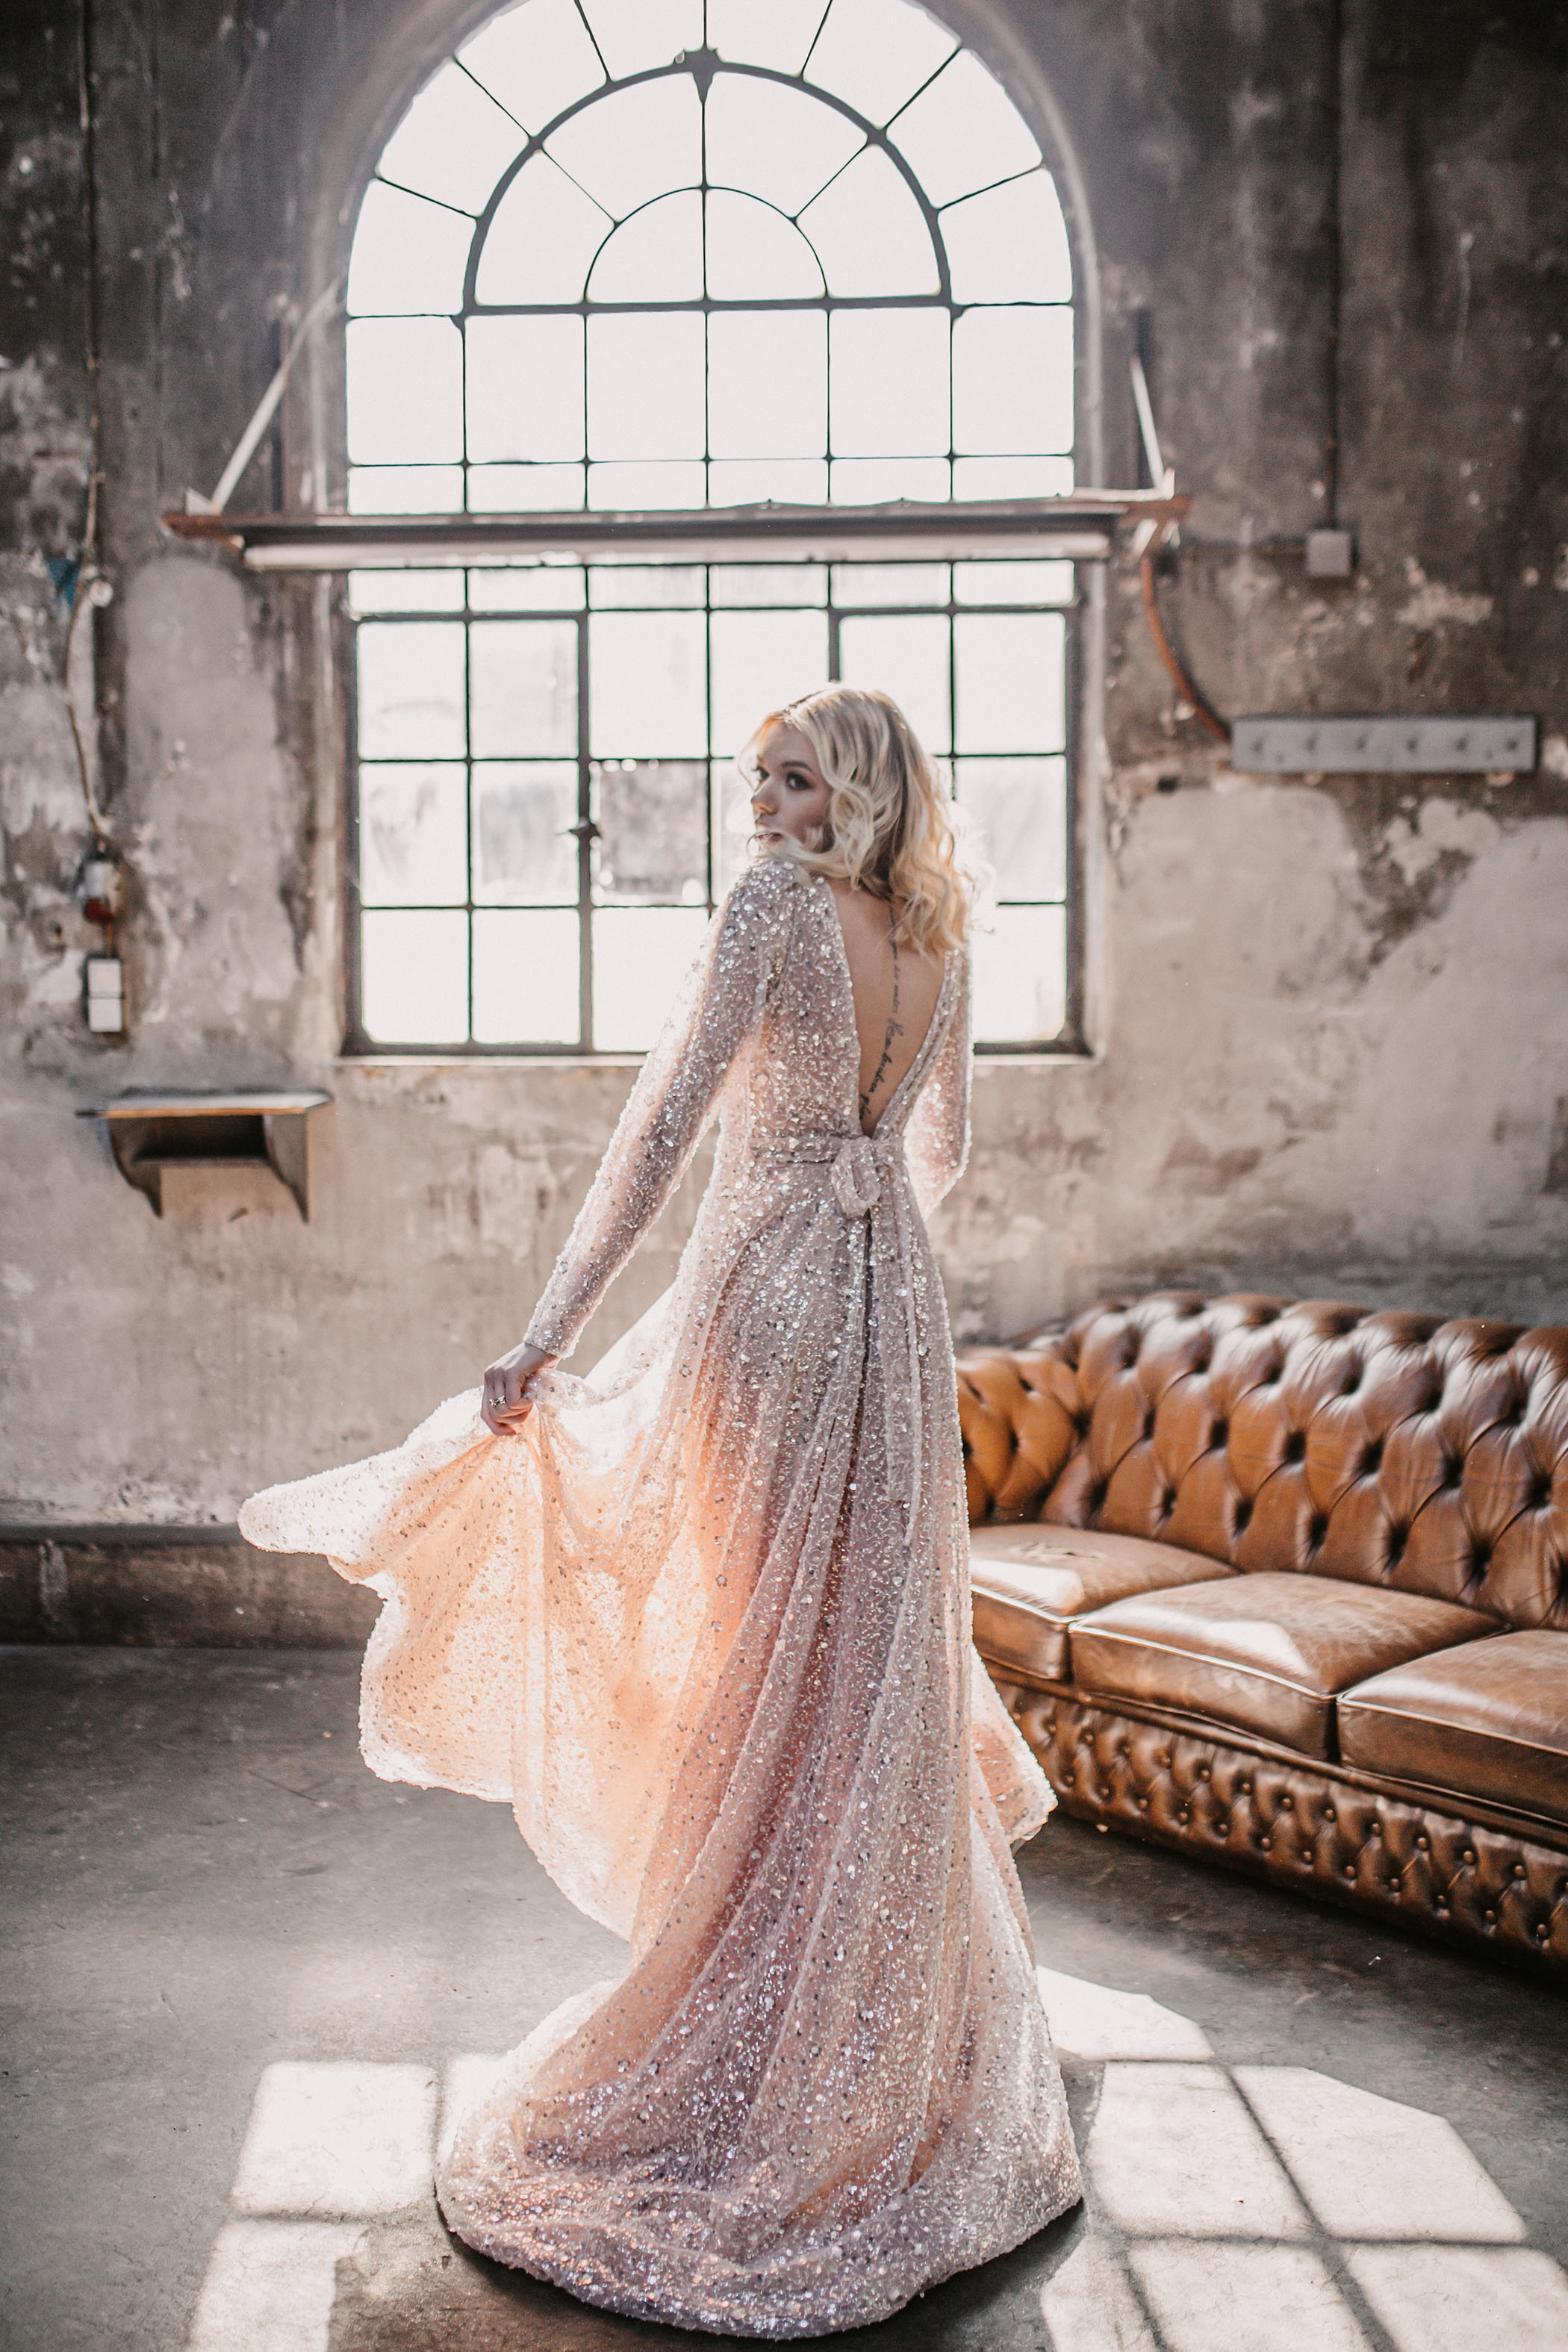 BY TORY sparkly Wedding Dress